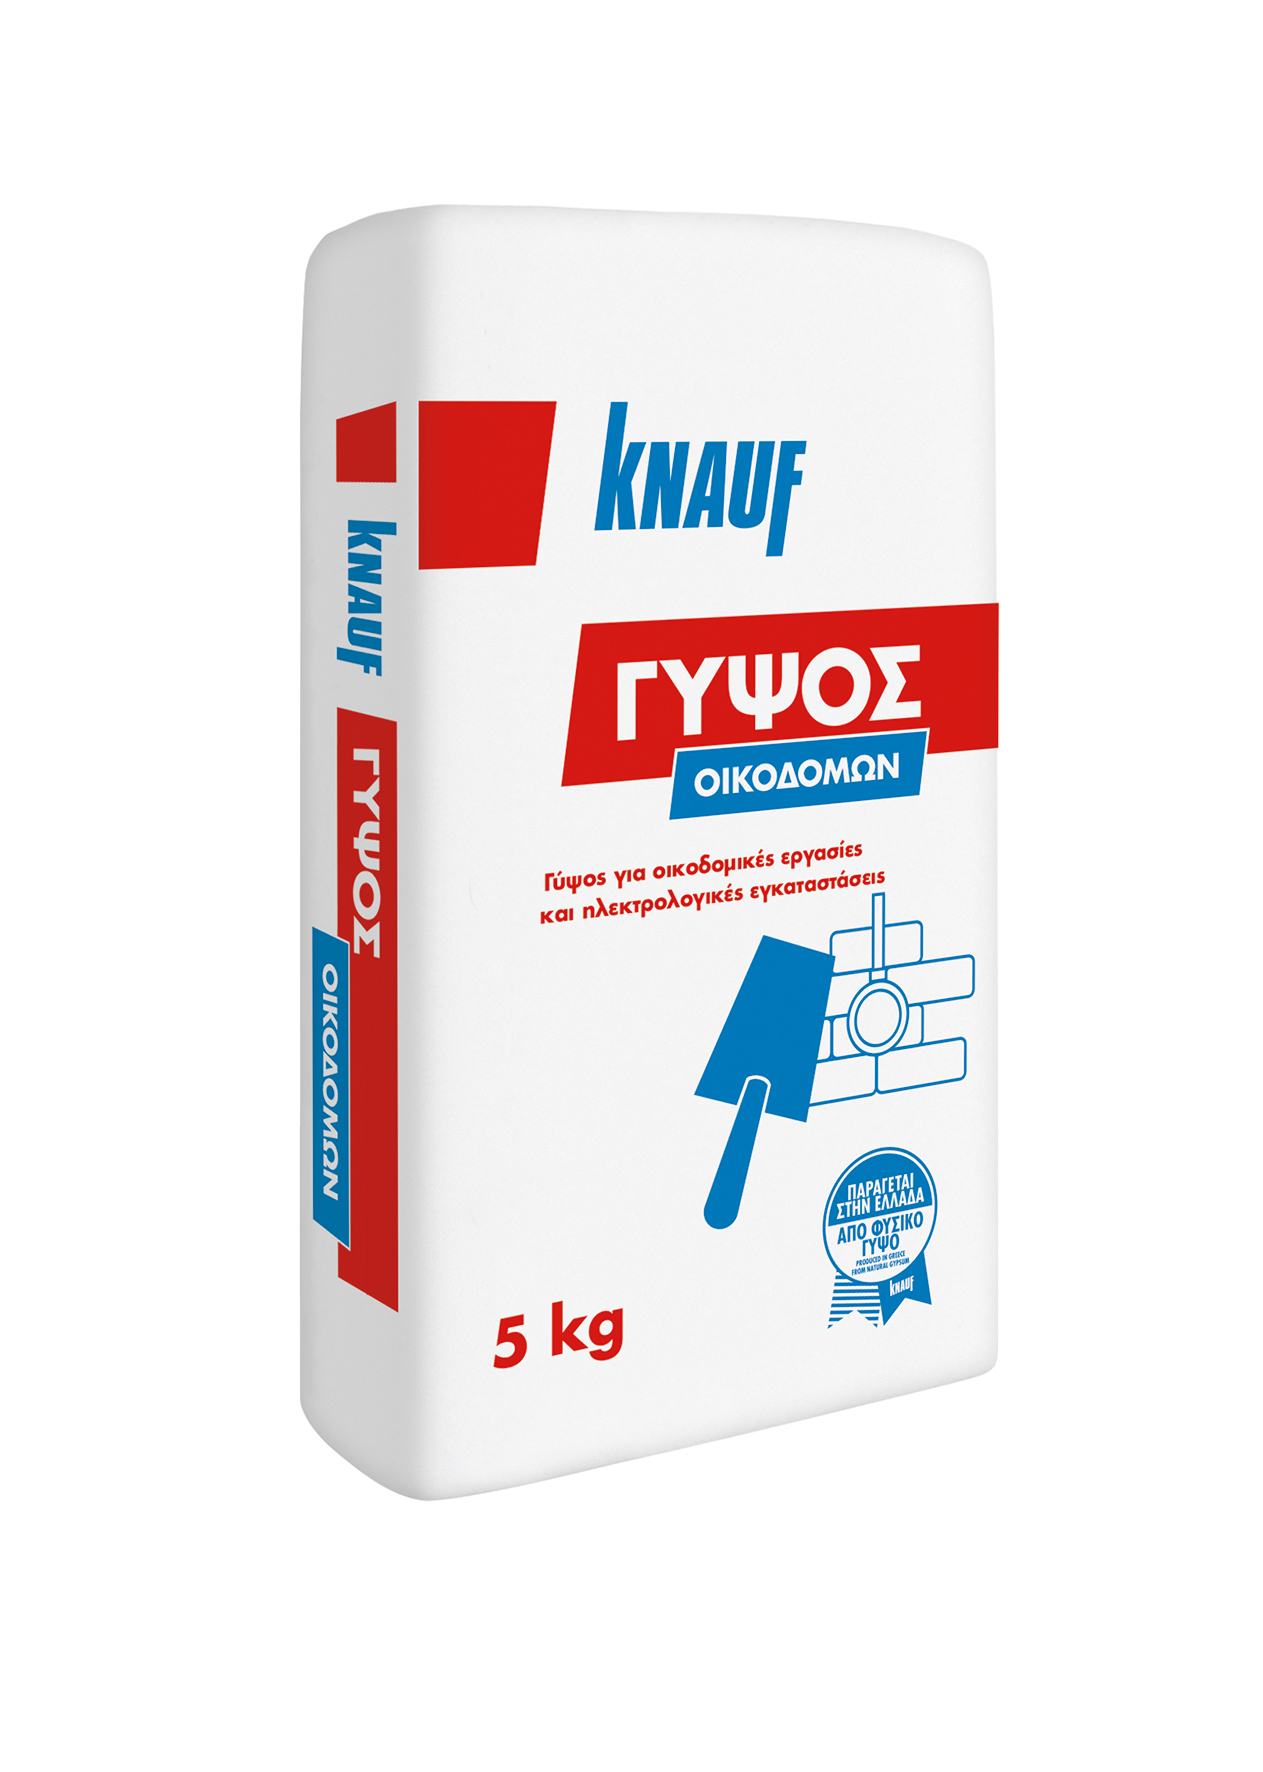 Knauf Οικοδομικός Γύψος 5kg